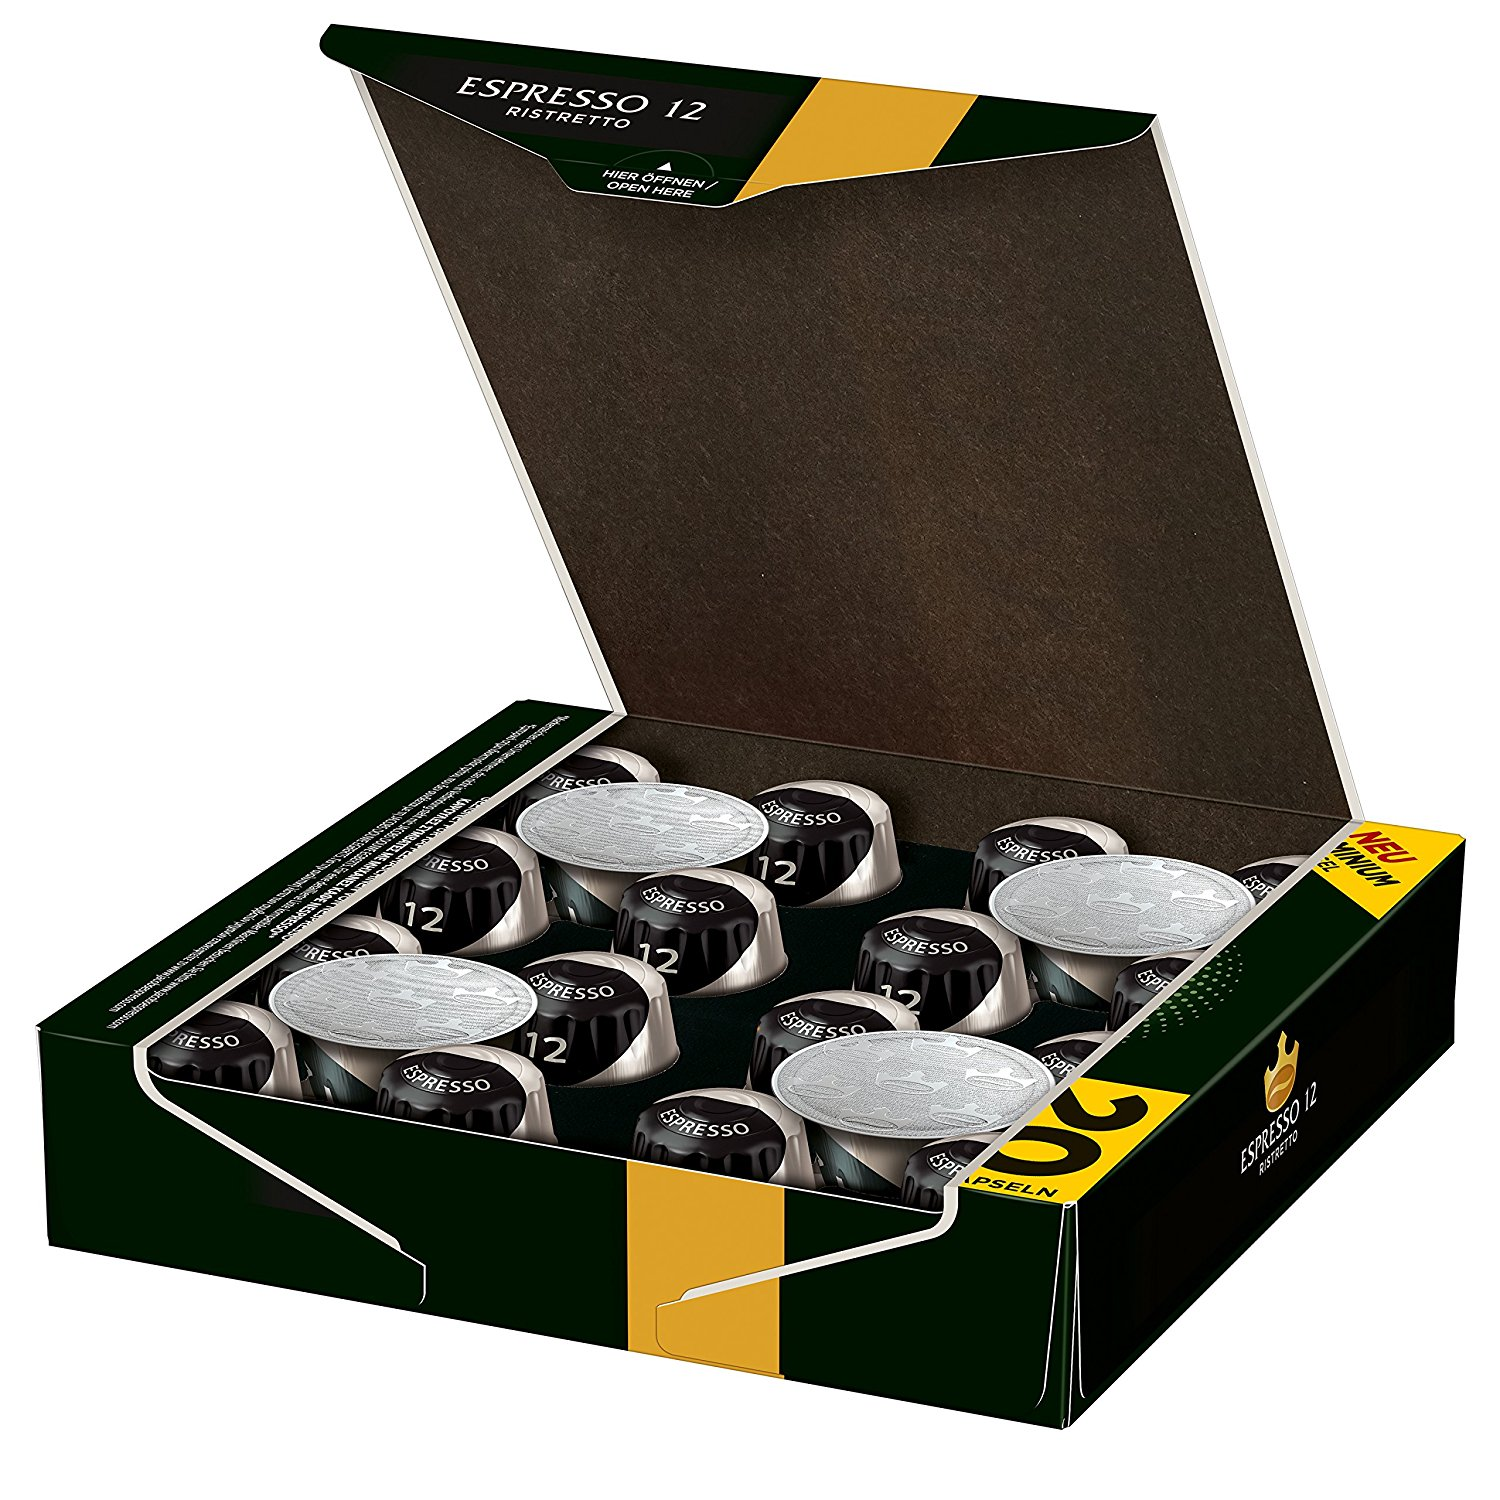 (Nespresso Nespresso®* System) 12 10 Ristretto 20 JACOBS Espresso kompatible Kaffeekapseln x